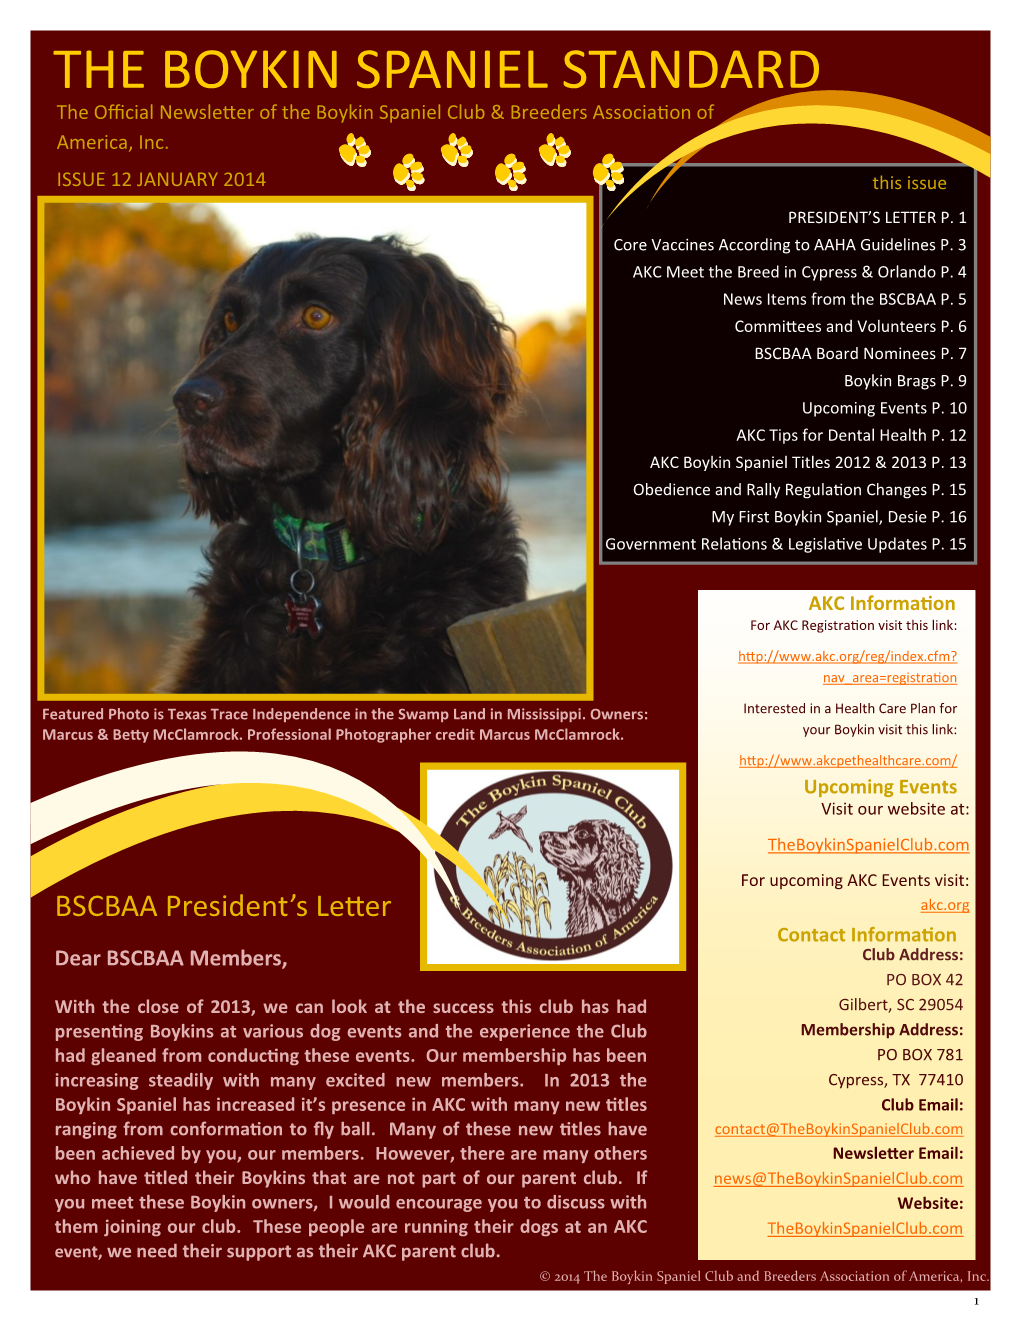 THE BOYKIN SPANIEL STANDARD the Official Newsletter of the Boykin Spaniel Club & Breeders Association of America, Inc